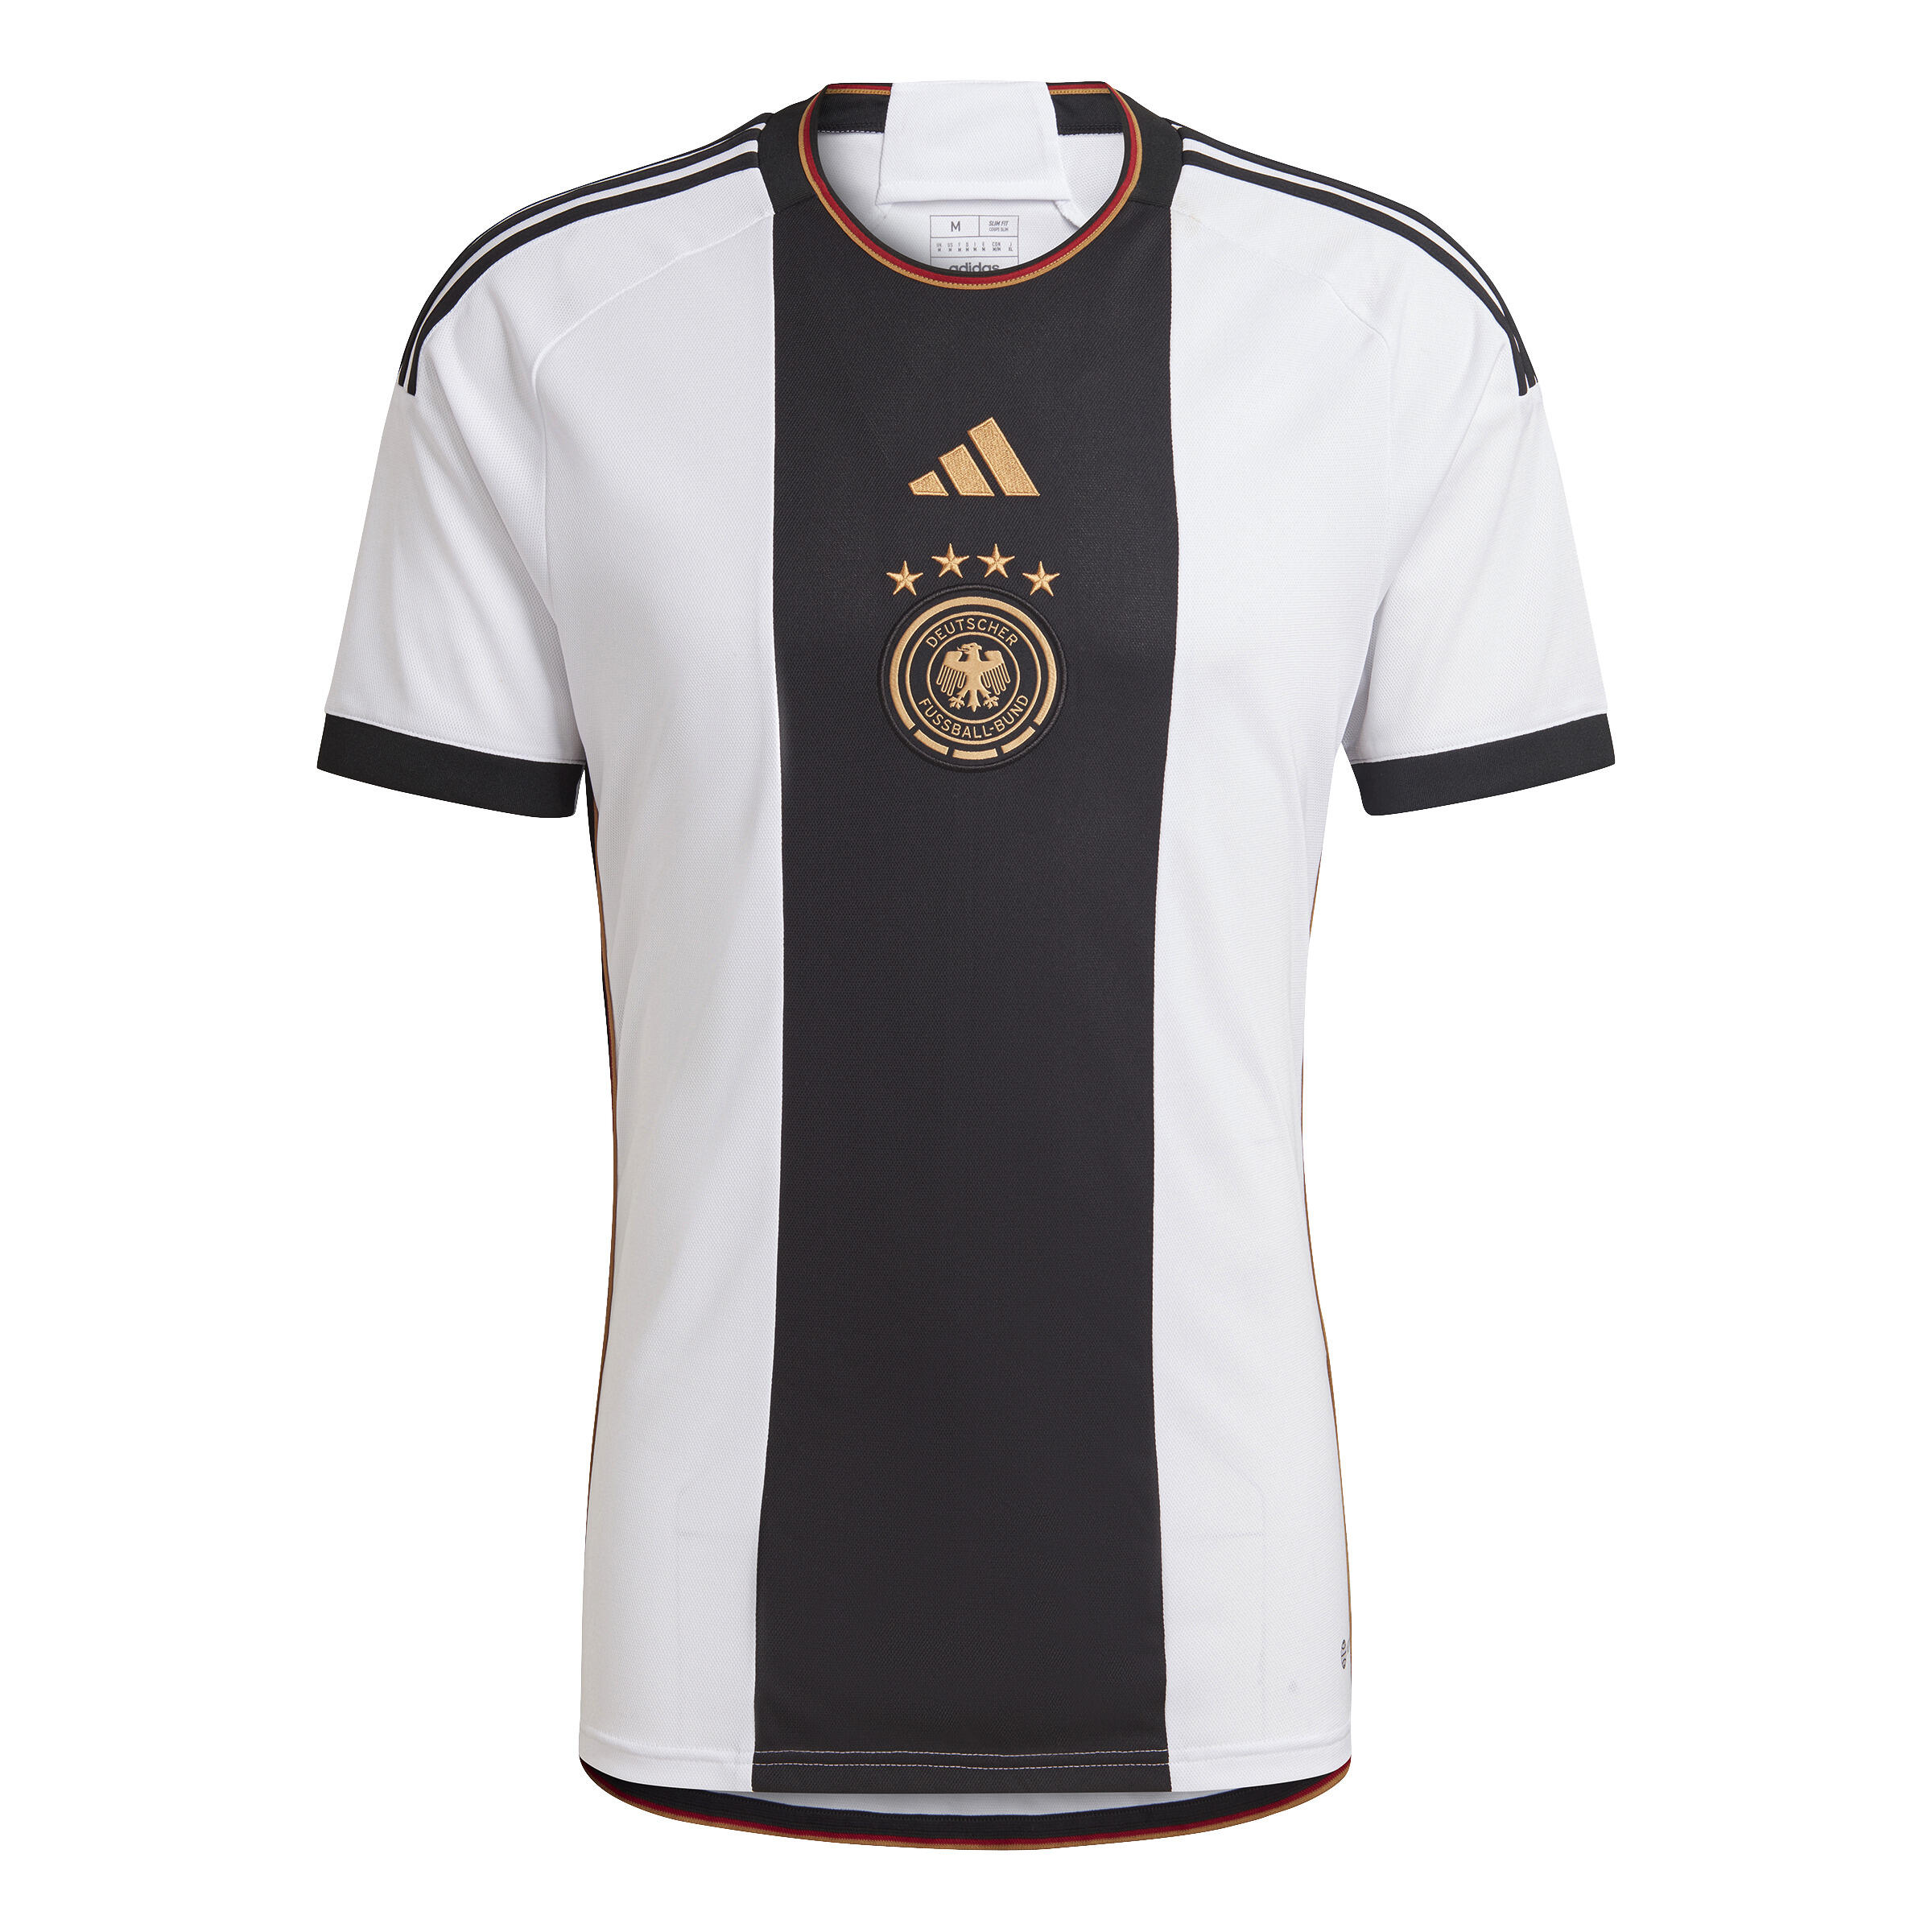 Tricou Fotbal Teren propriu Replică Germania 22 Alb-Negru Adulţi